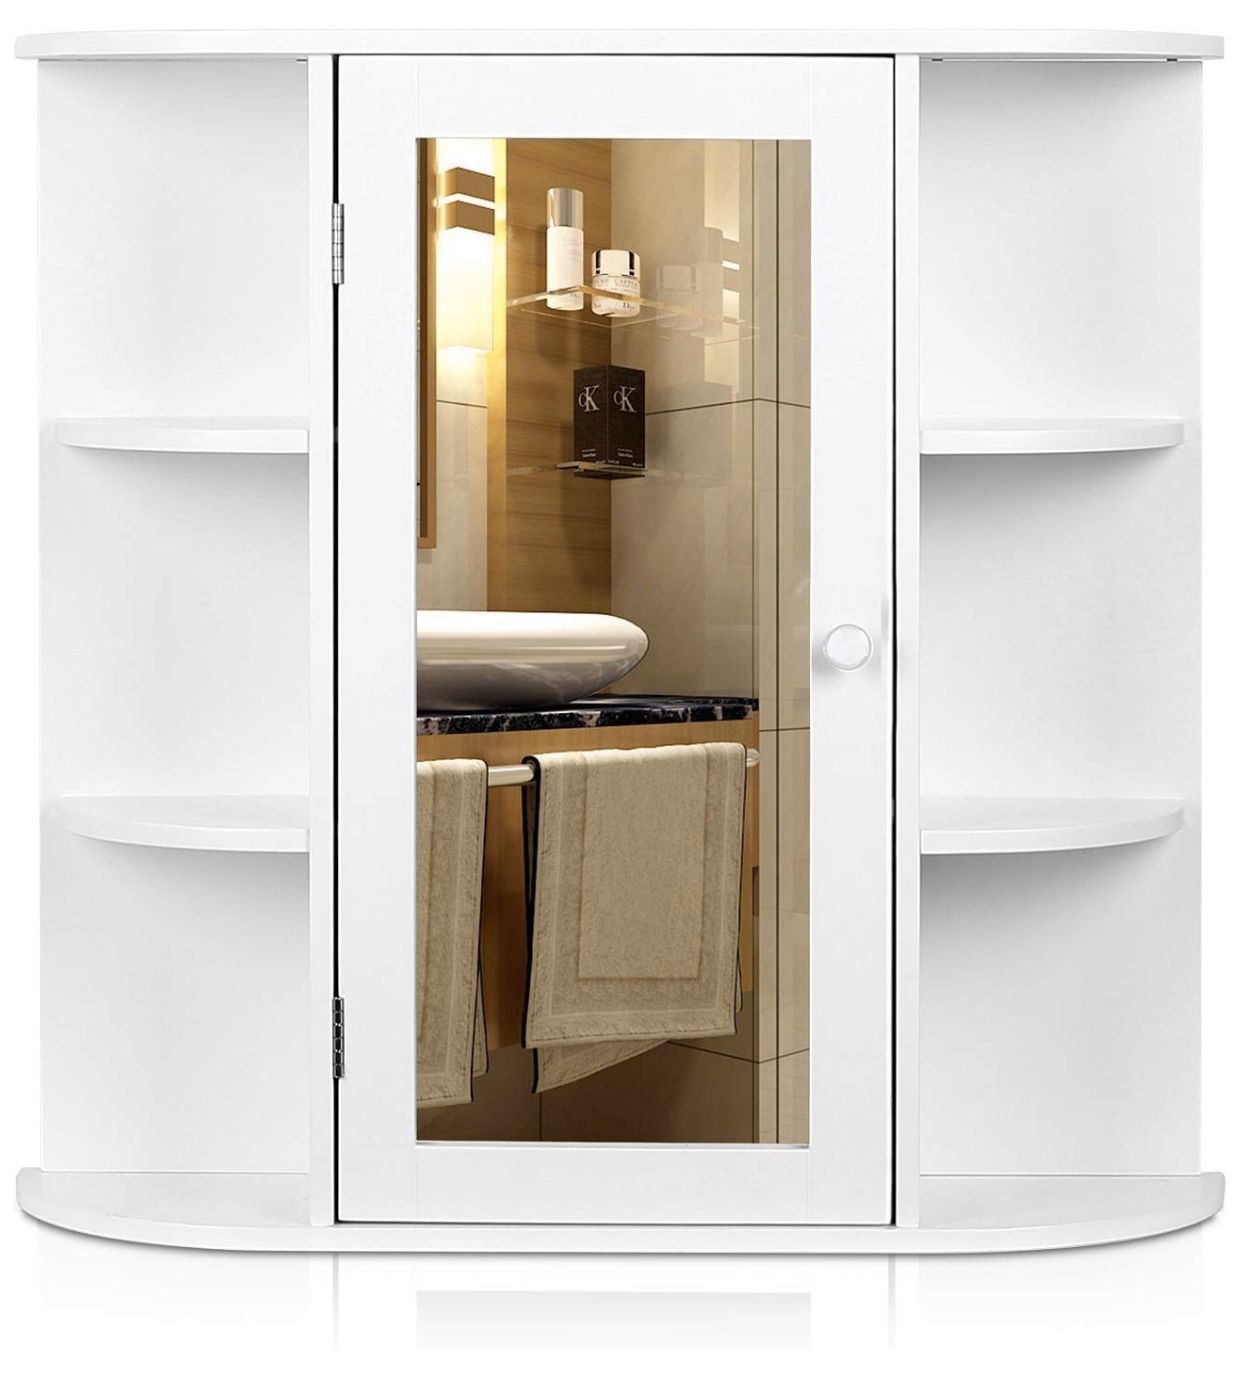 HOMFA Bathroom Wall Cabinet Multipurpose Kitchen Medicine Storage Organizer with Mirror Single Door Shelves,White Finish